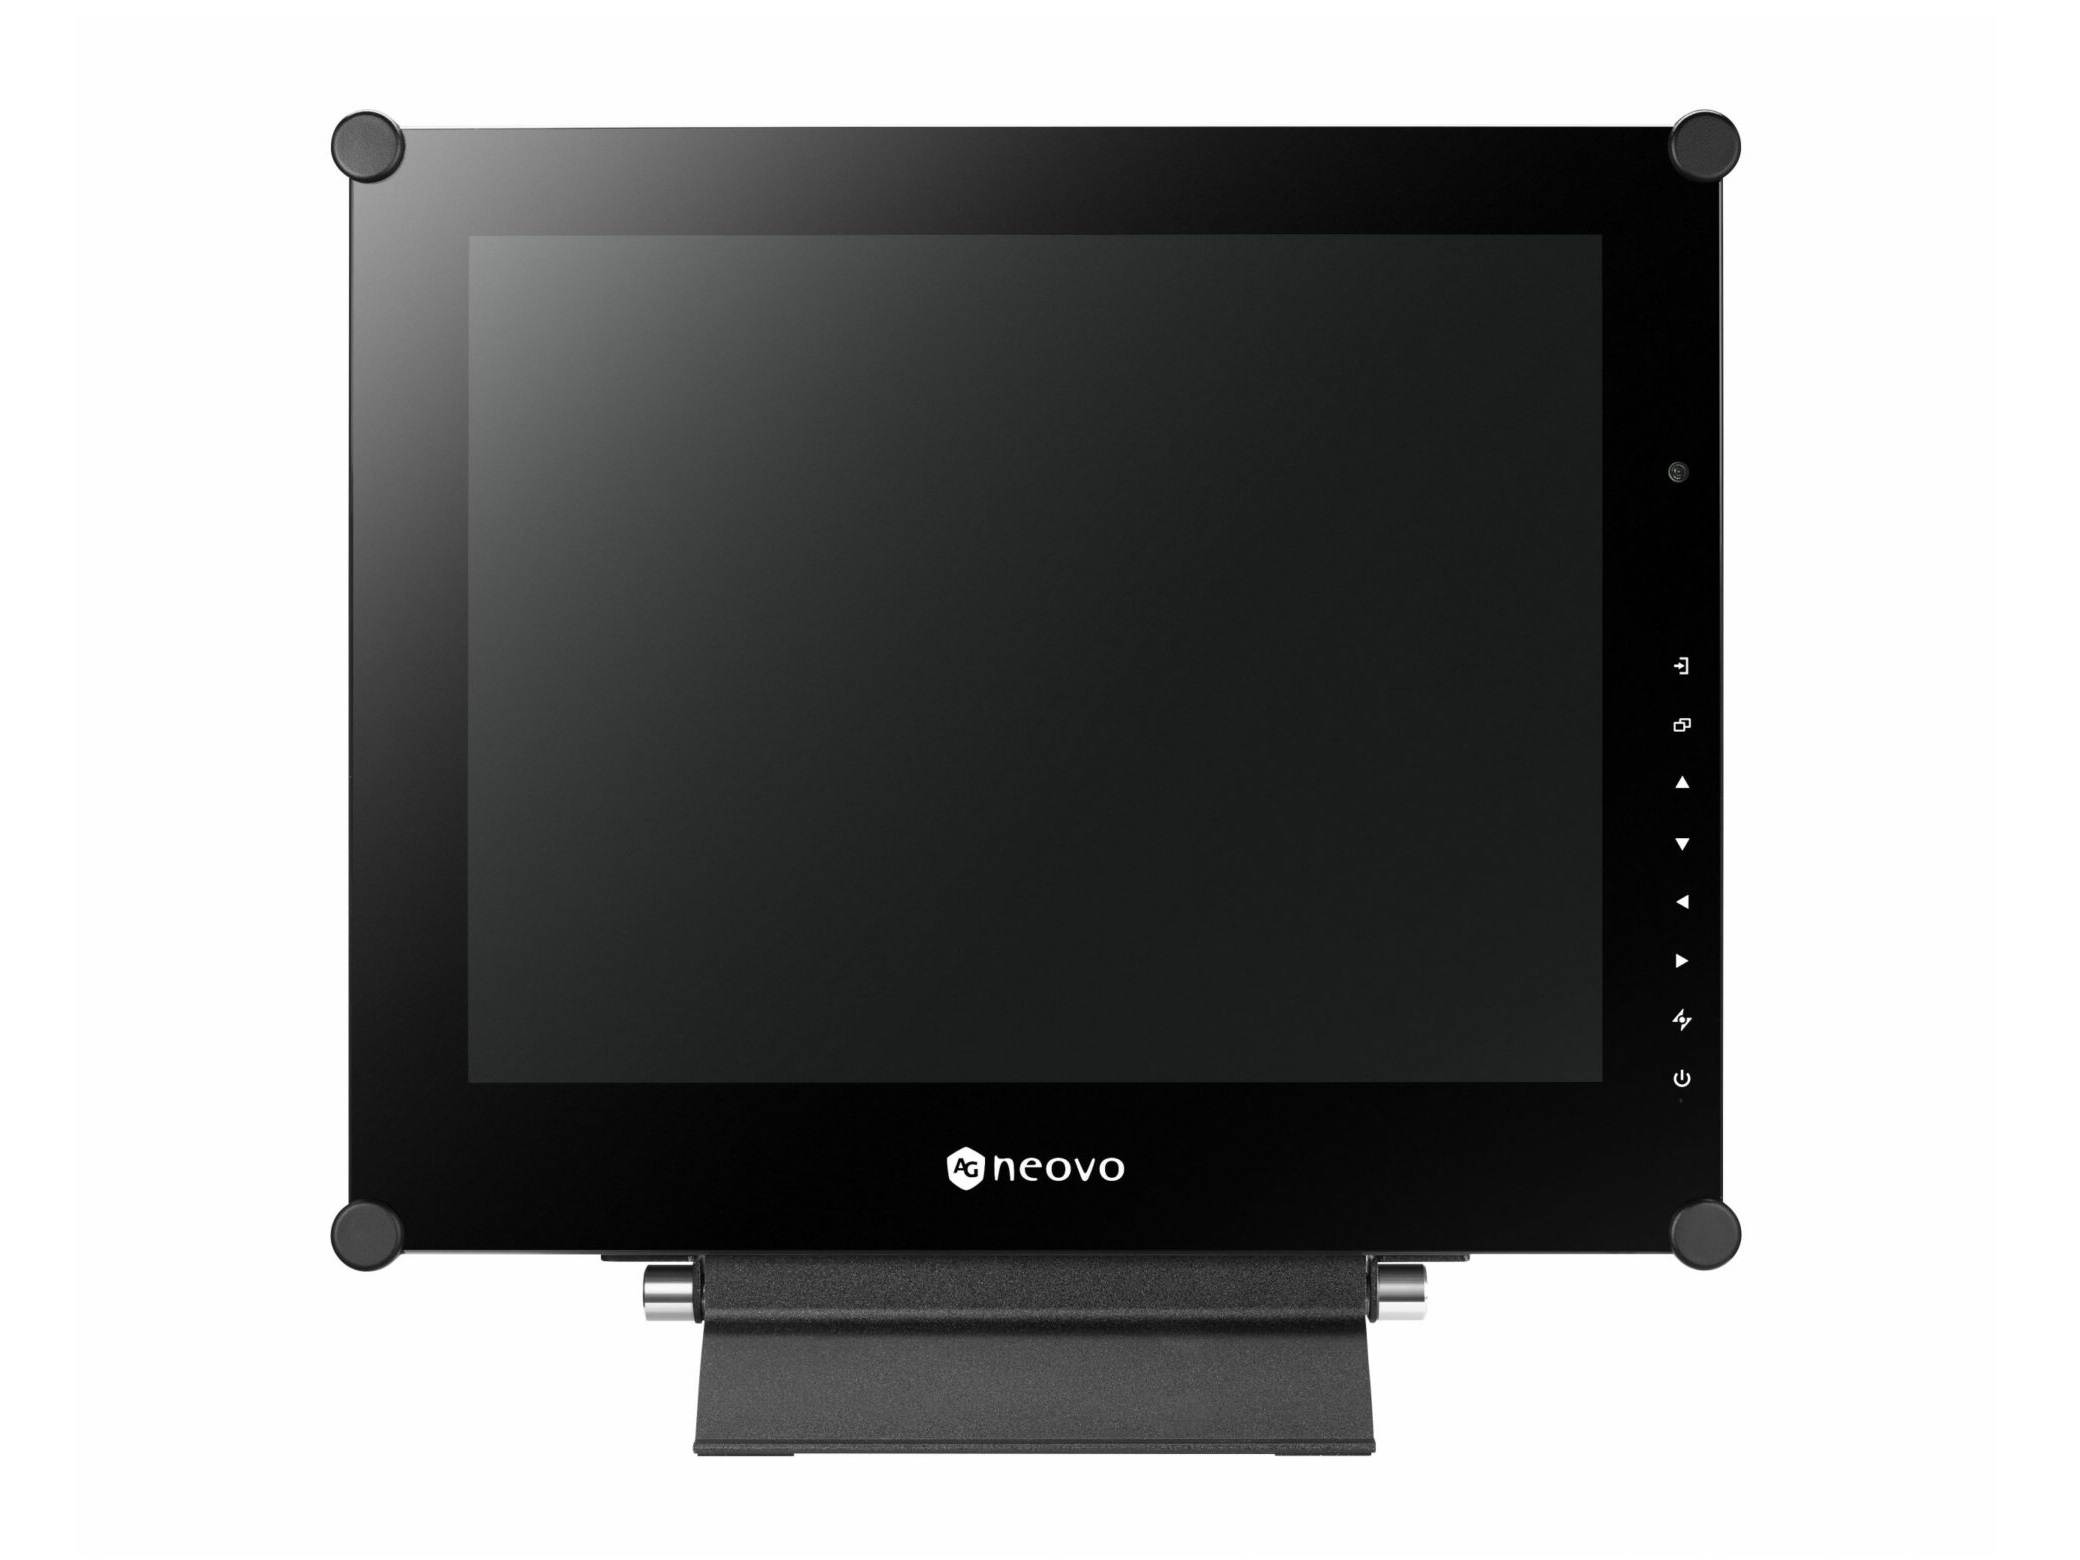 SX-15G 15 inch 4x3 Surveillance Monitor by AG Neovo